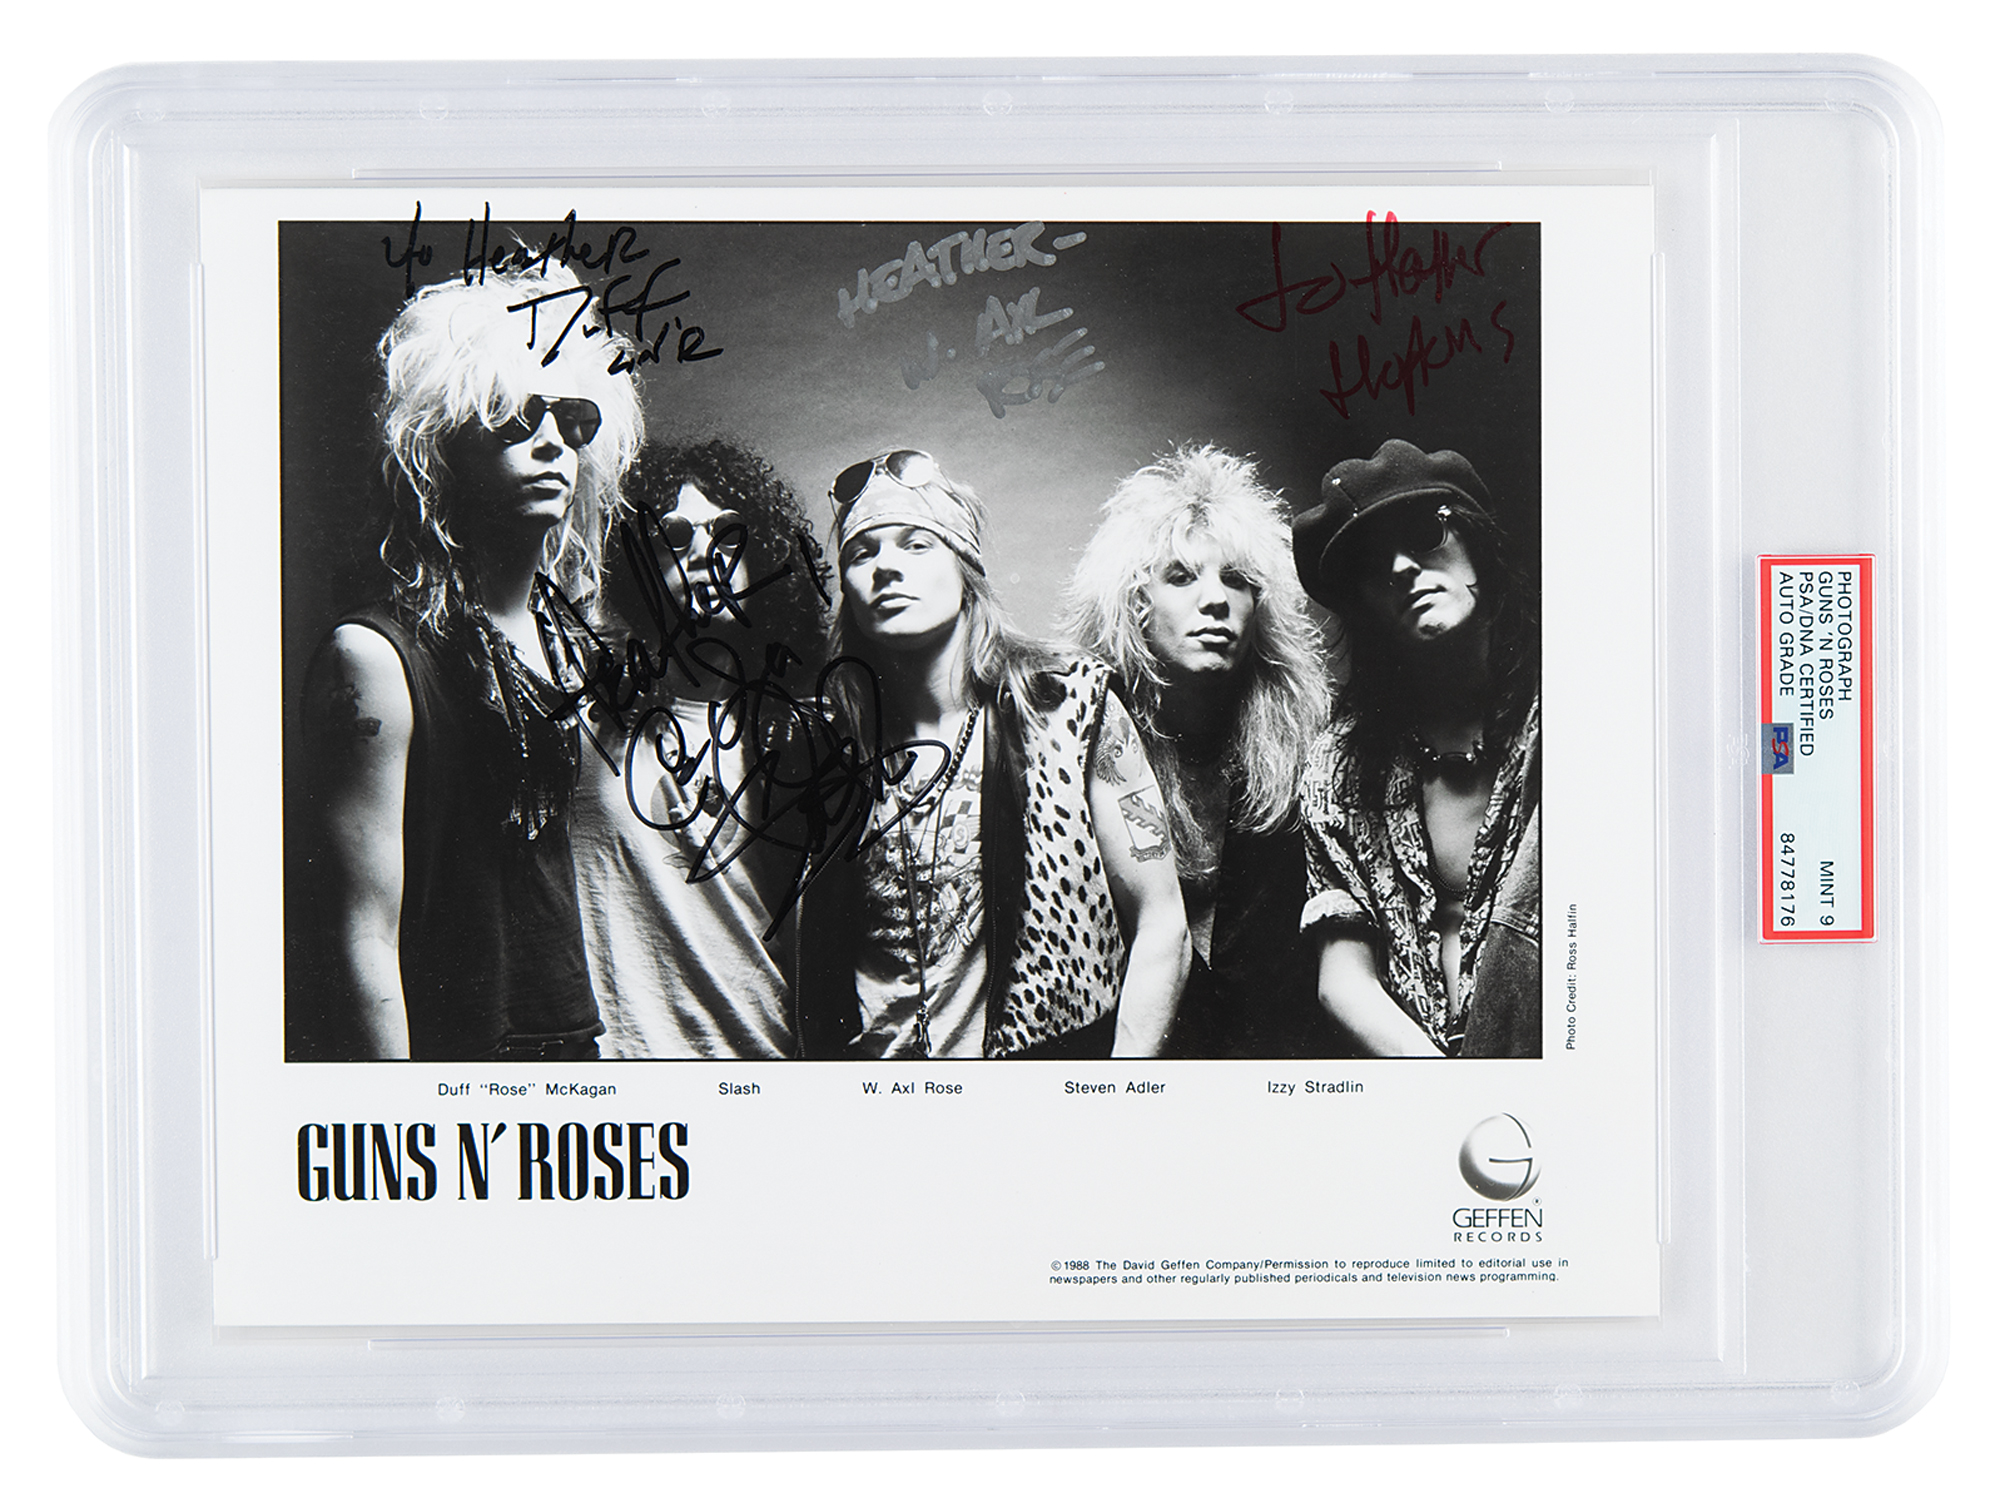 Lot #7328 Guns N’ Roses Signed Photograph - PSA MINT 9